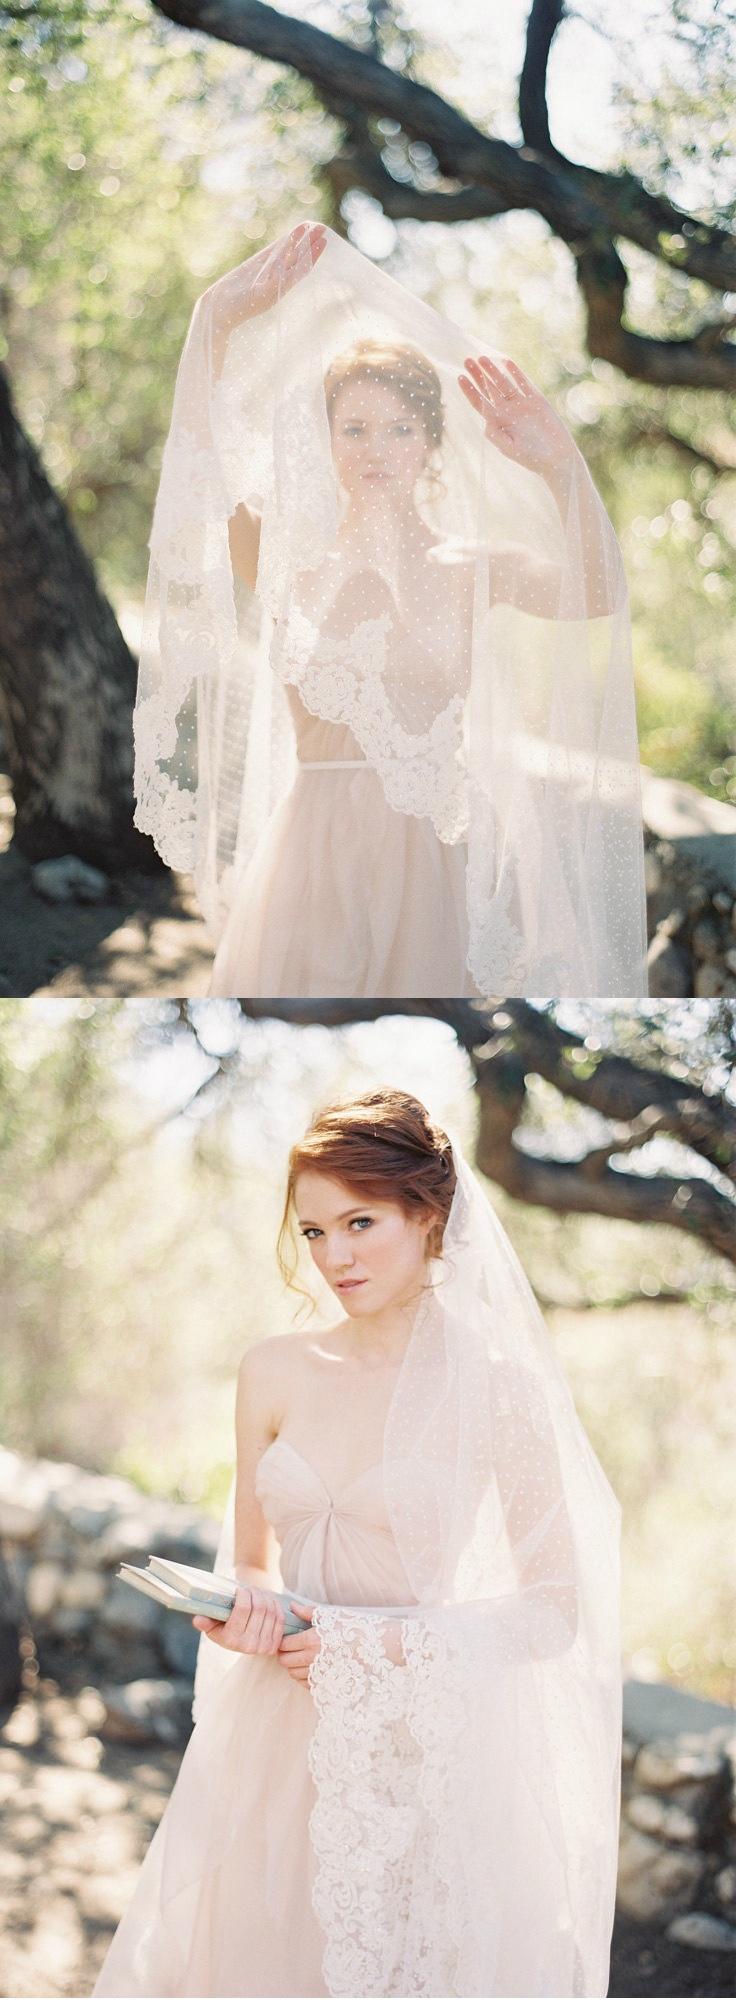 زفاف - Circular Ivory Wedding Bridal Veil With Polka Dots And Beaded Lace, Dotted Blusher Veil - Allure